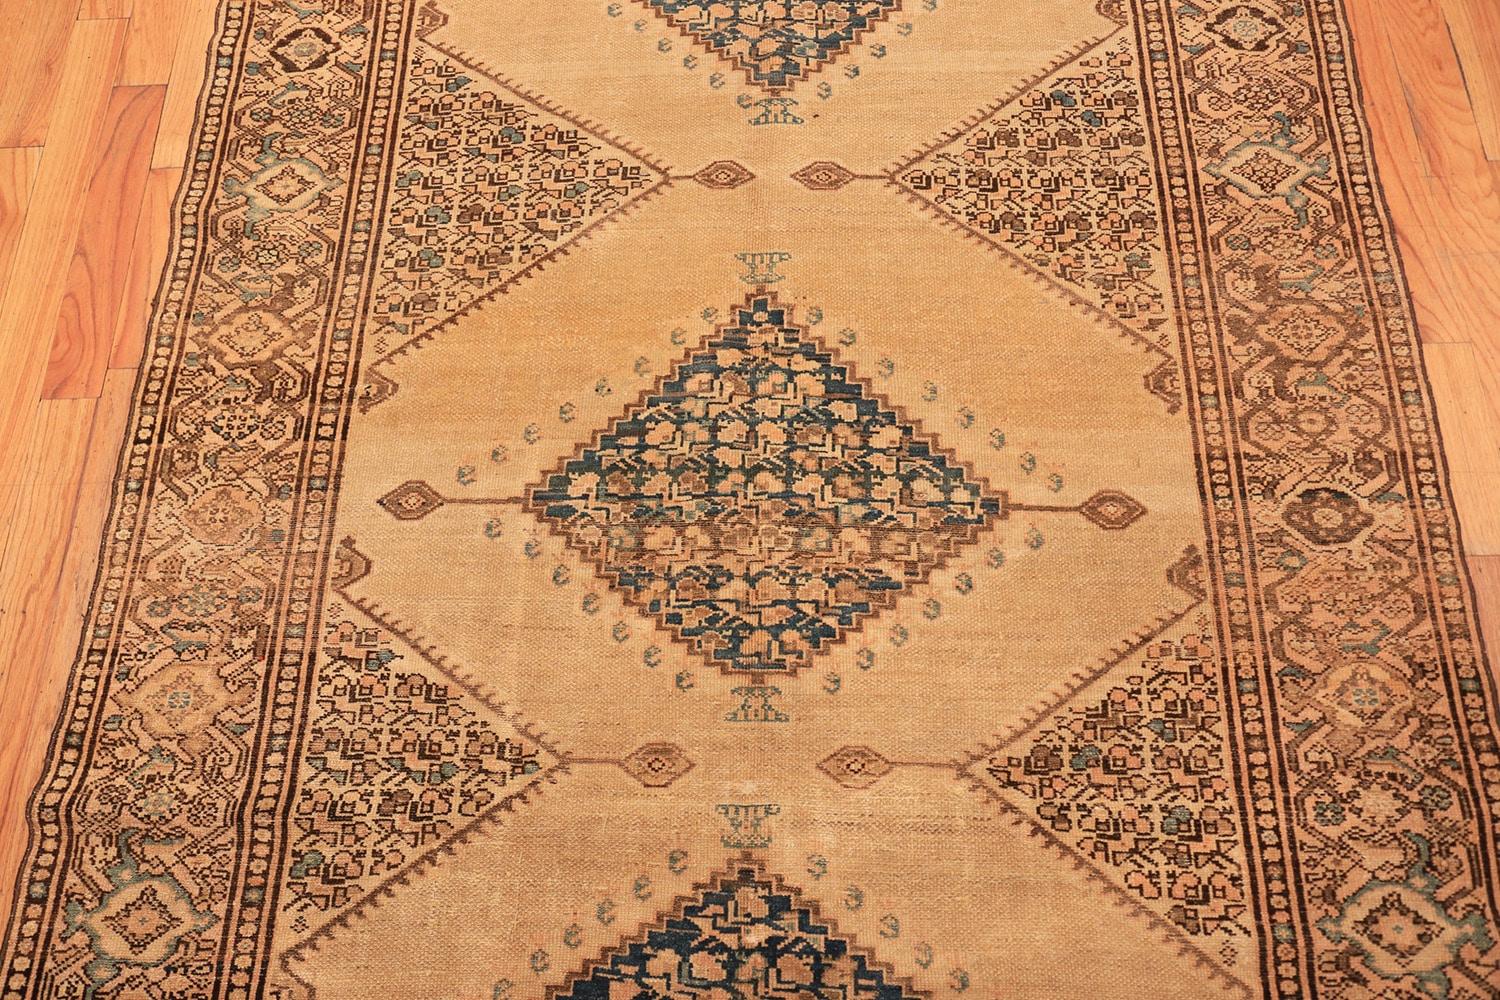 Antique Persian Malayer Rug, Origin: Persia, Circa: 1900. Size: 5 ft 4 in x 11 ft 10 in (1.63 m x 3.61 m)

